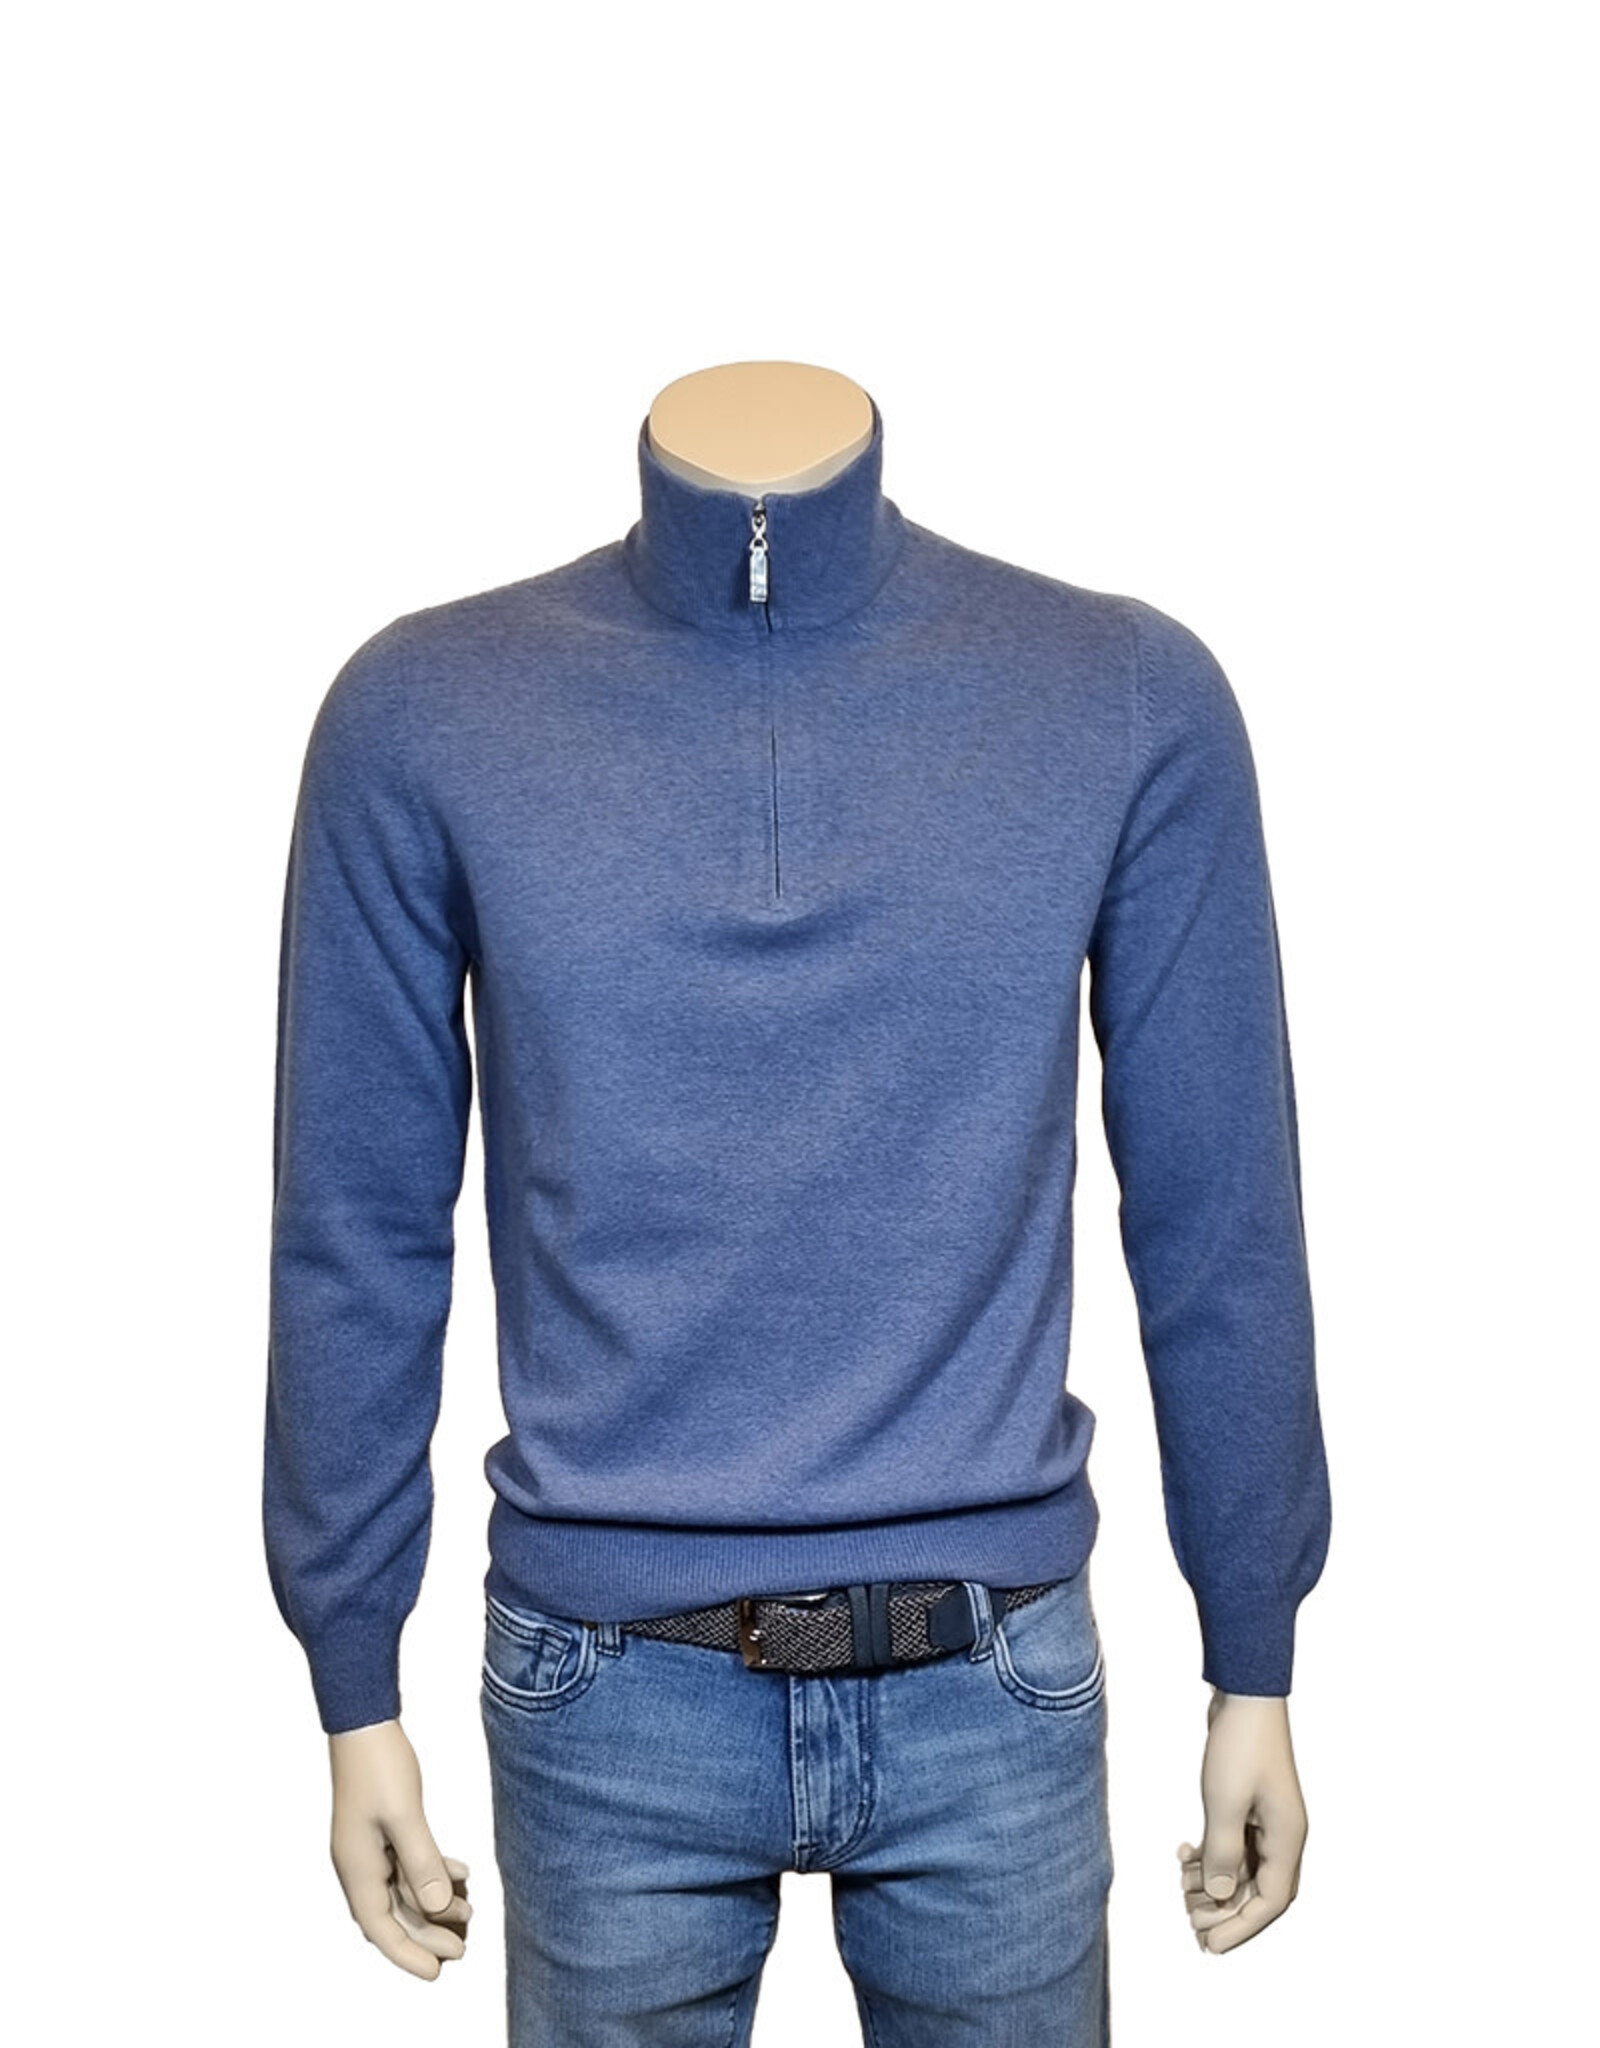 Gran Sasso Sandmore's sweater mock neck light blue